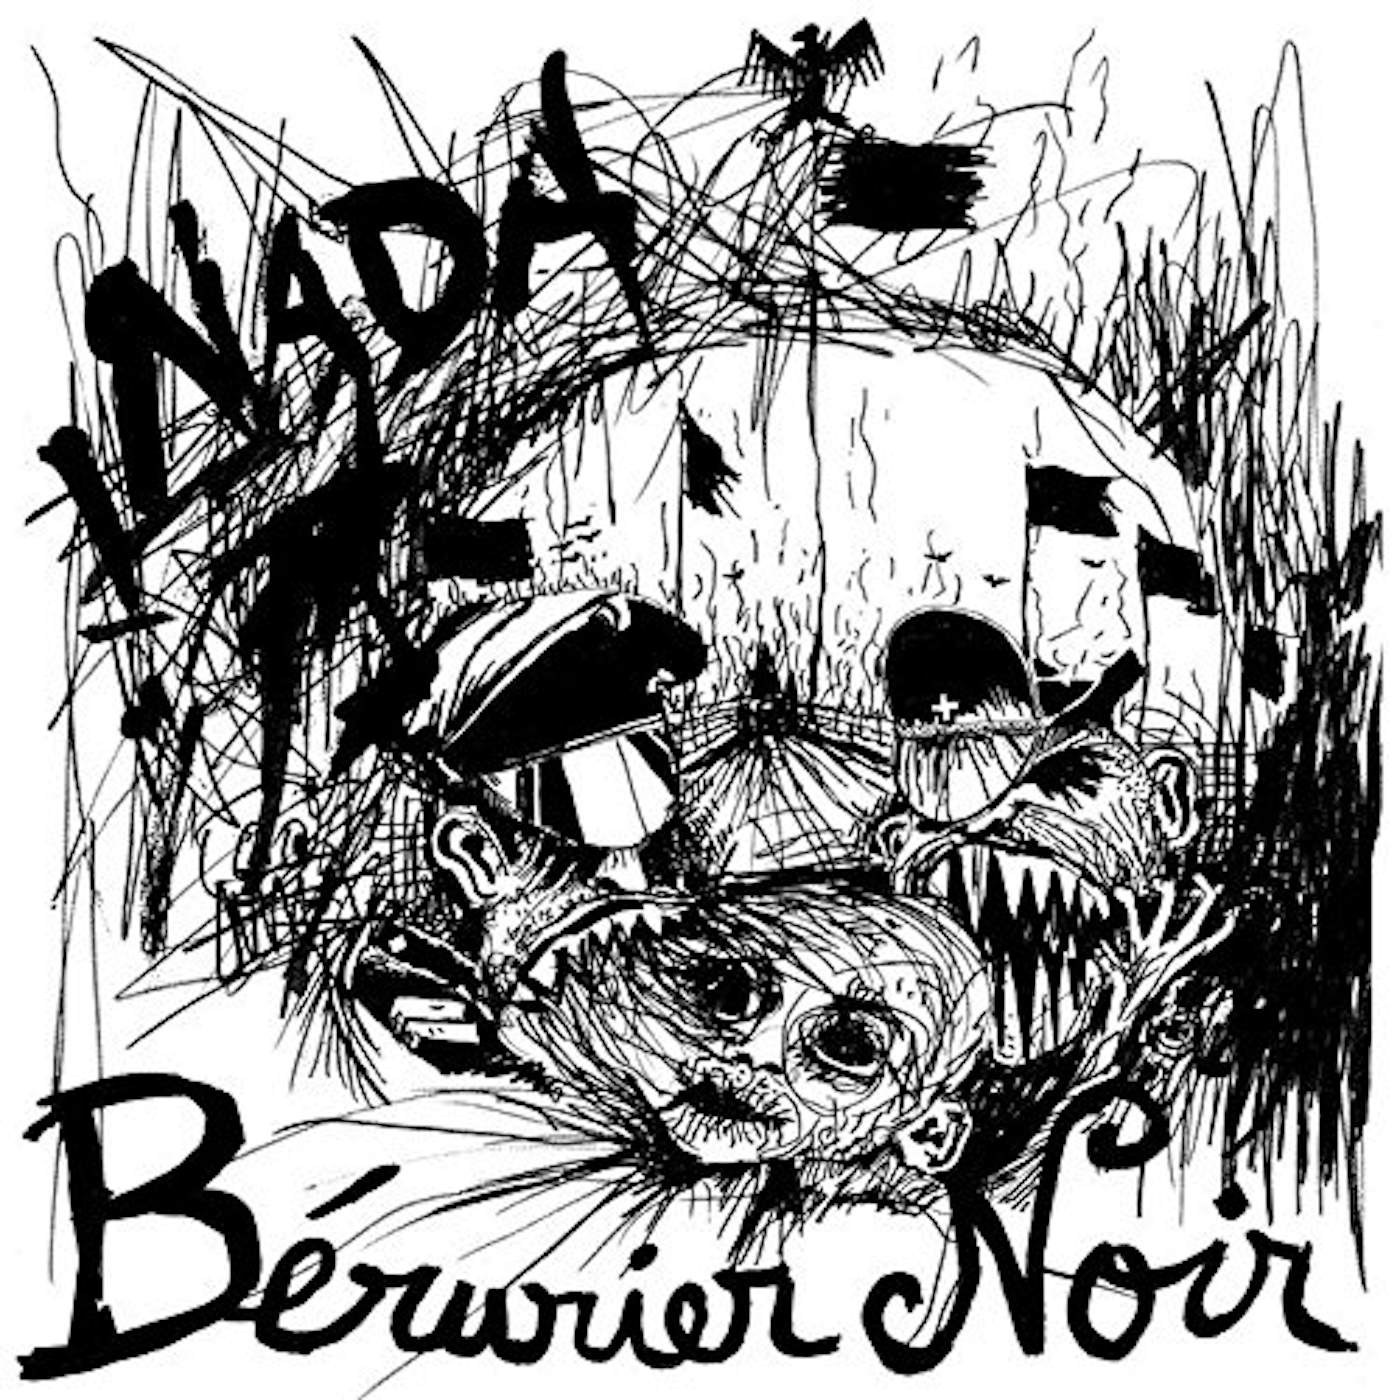 Bérurier Noir Nada Vinyl Record